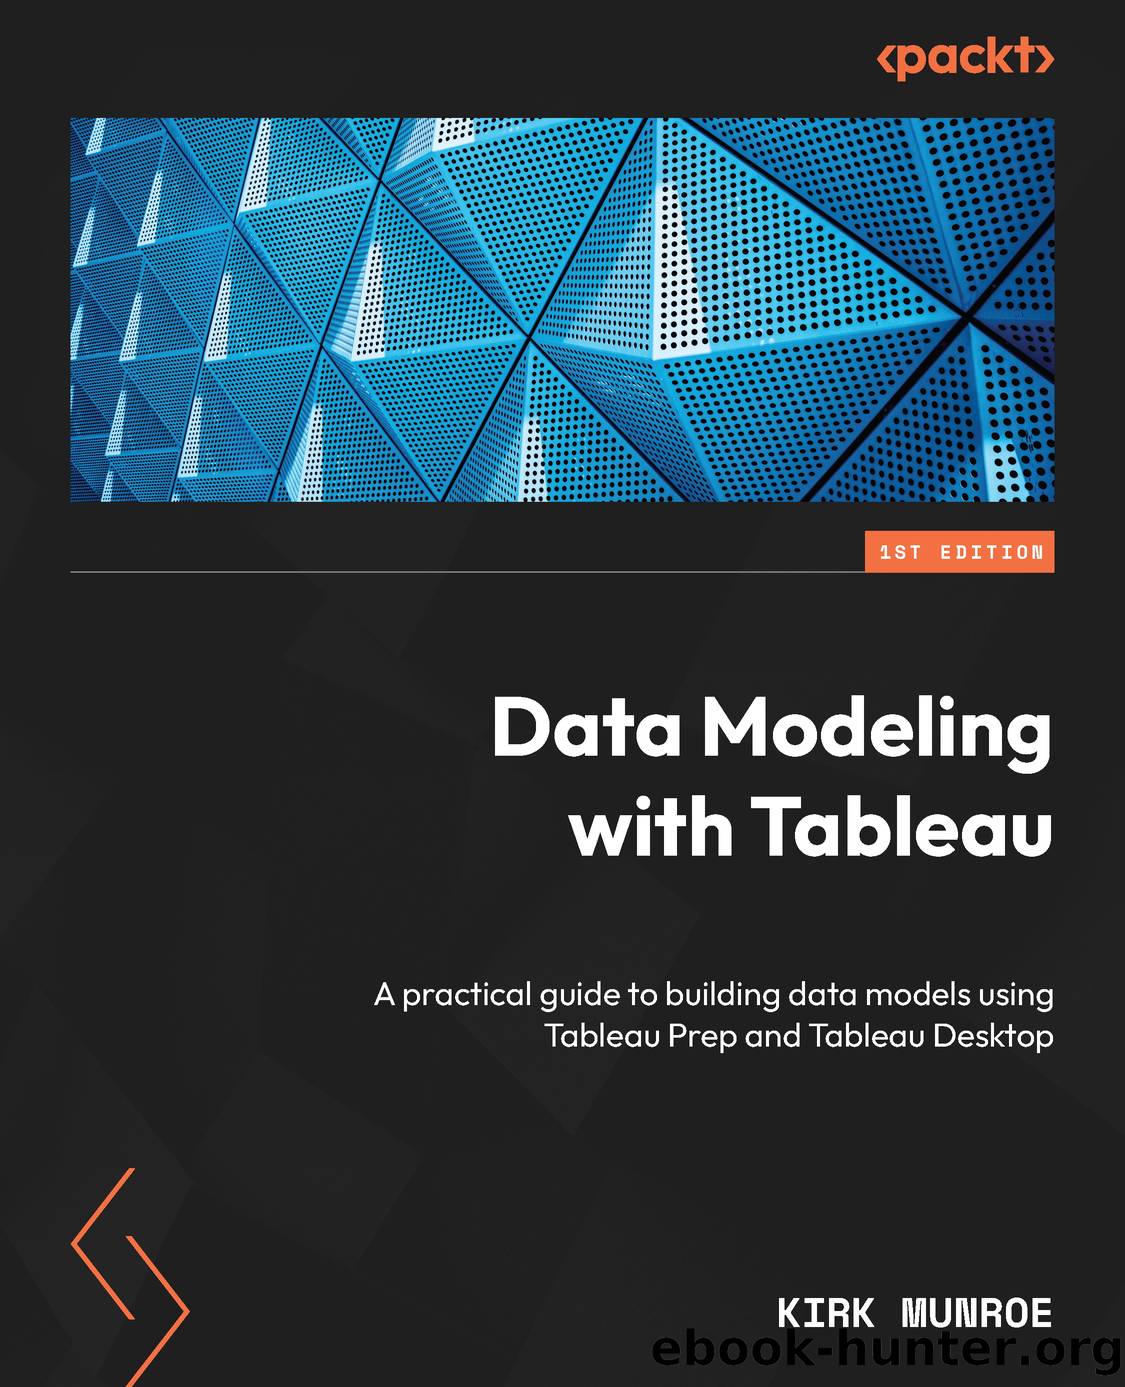 Data Modeling with Tableau by Kirk Munroe